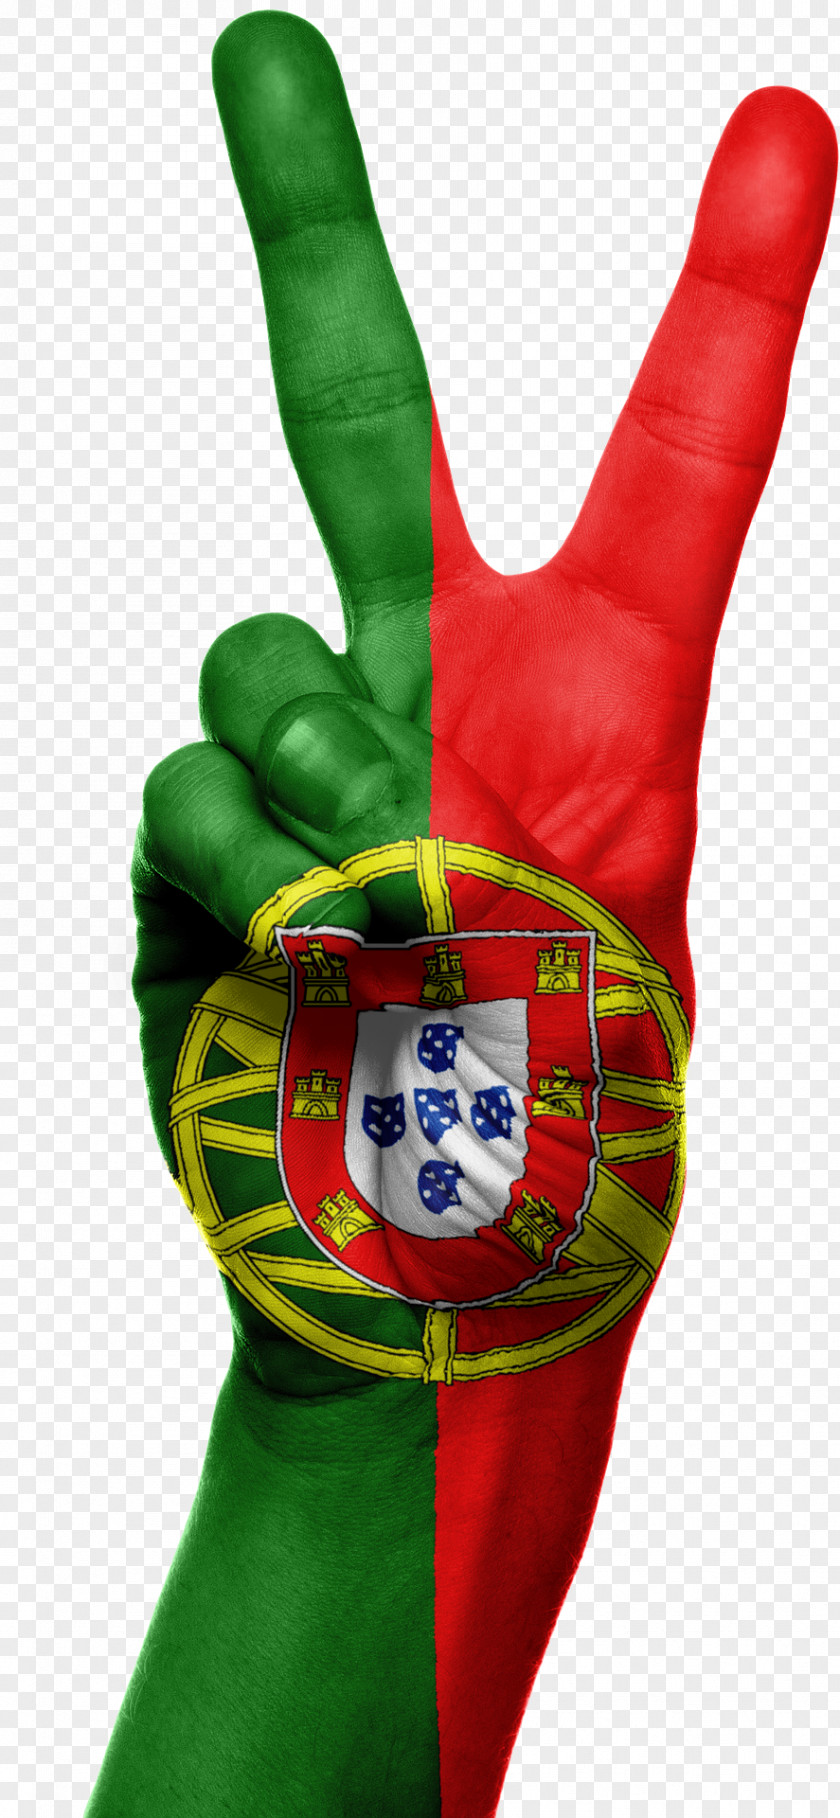 Flag Of Portugal National Football Team Portuguese Empire 5 October 1910 Revolution PNG